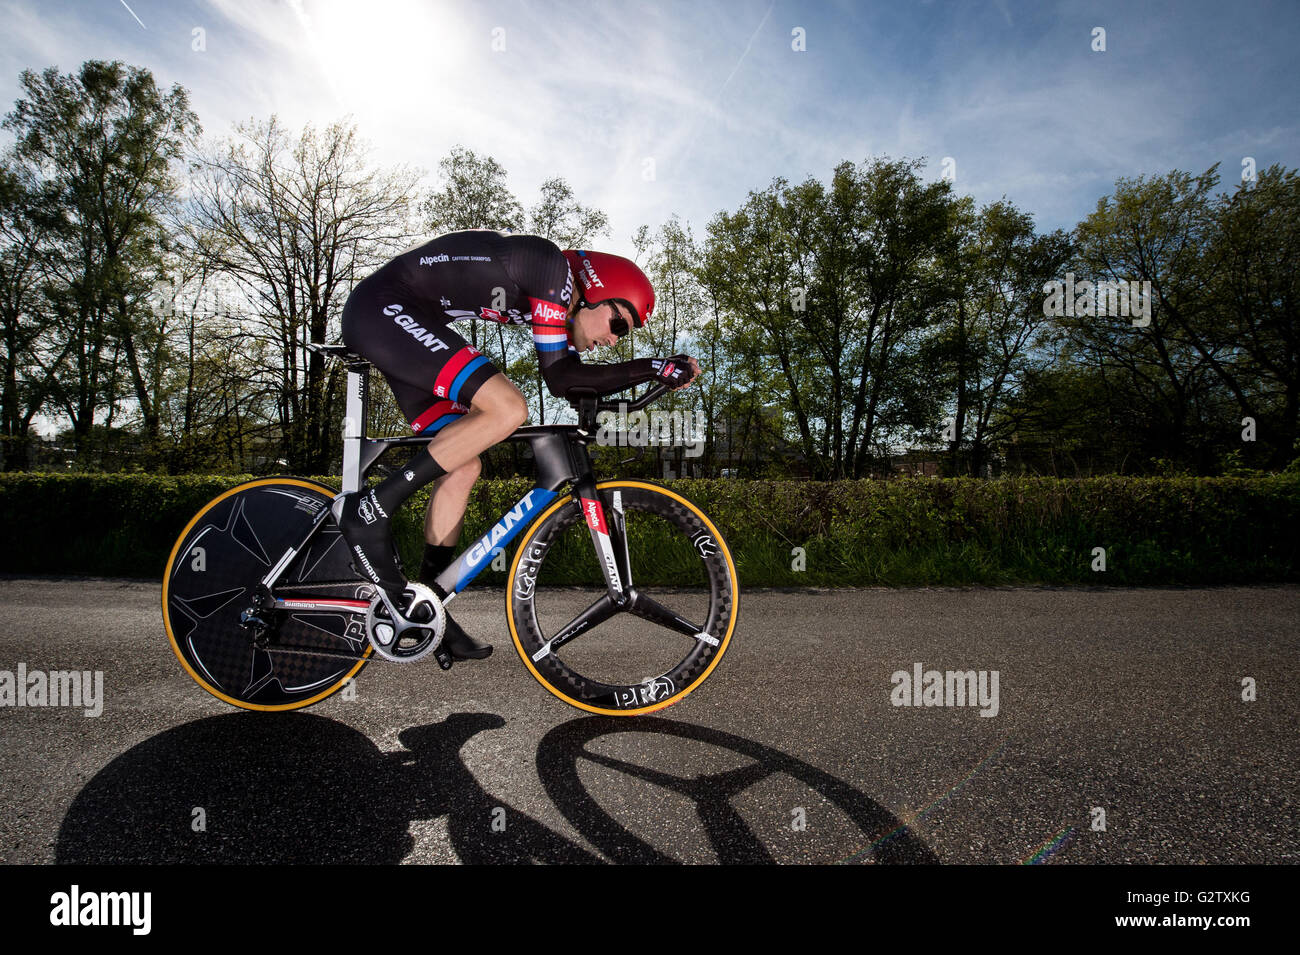 2016 il Giro d'Italia. Fase 1, cronometro individuale, Apeldoorn. Tom Dumoulin. Foto Stock